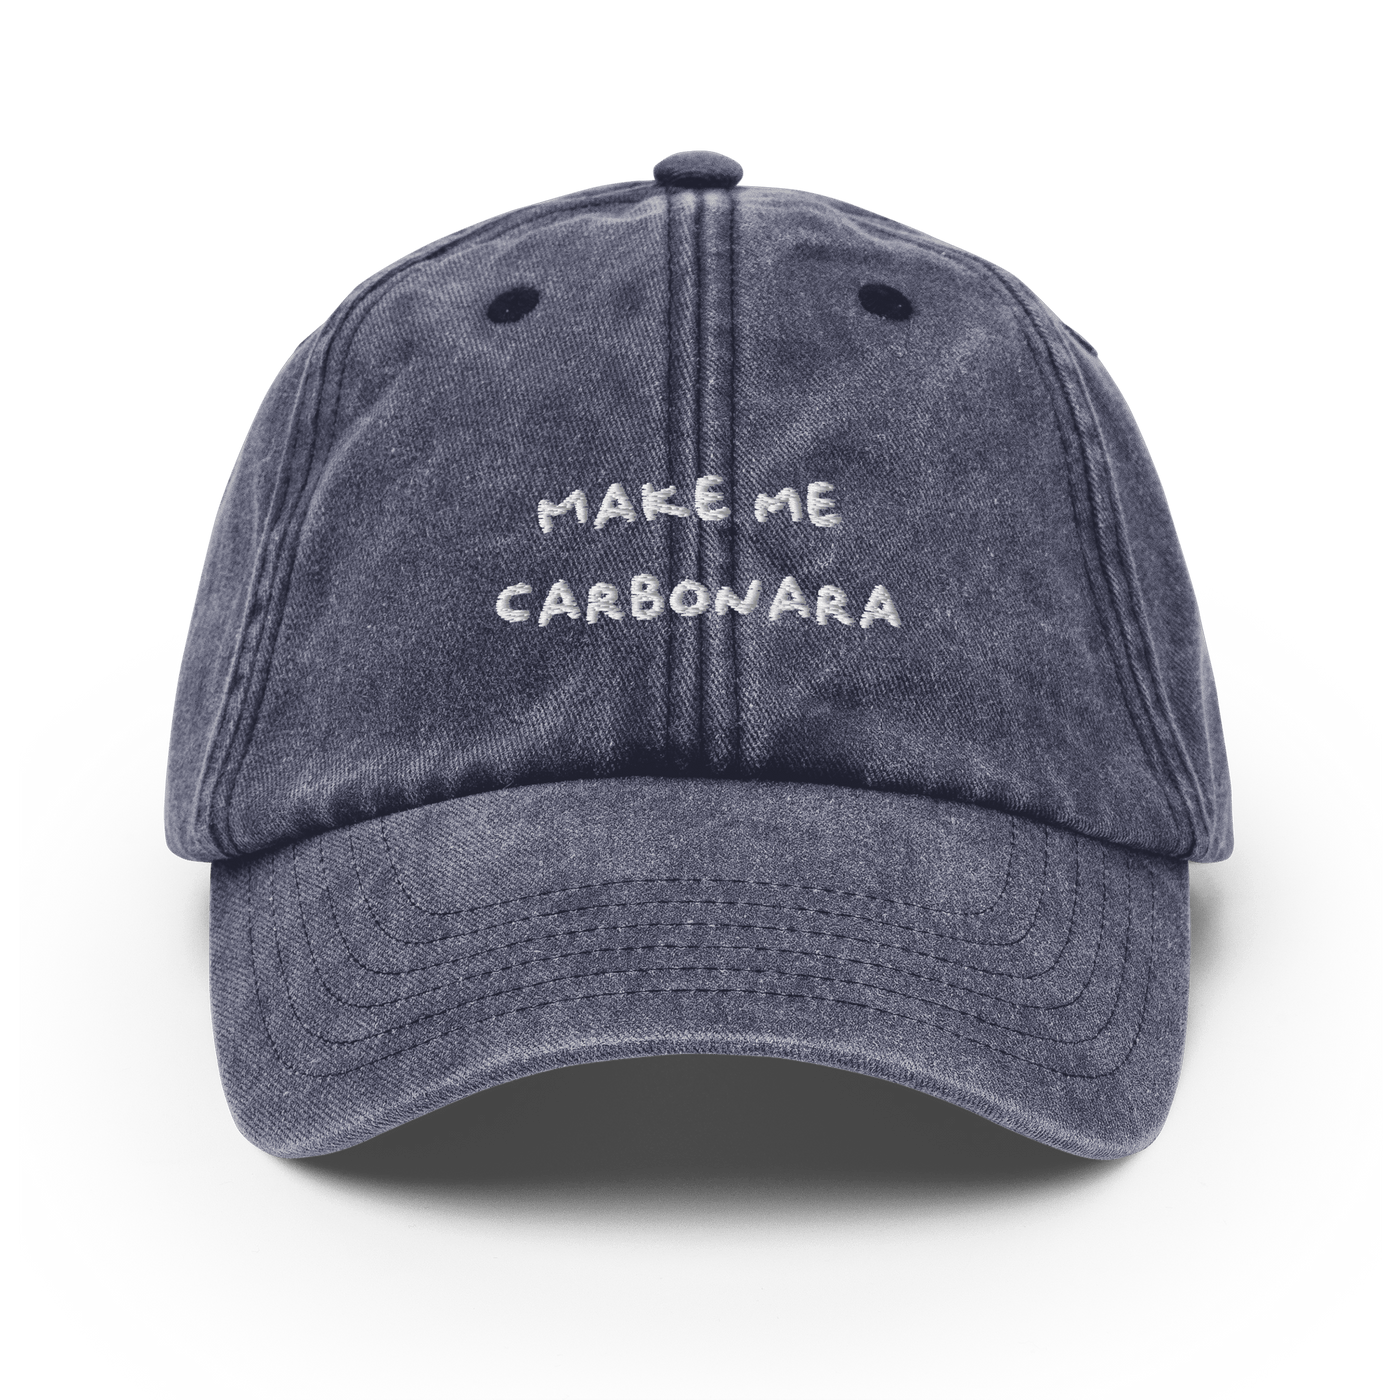 Make me Carbonara Vintage Hat - Vintage Denim - - Just Another Cap Store